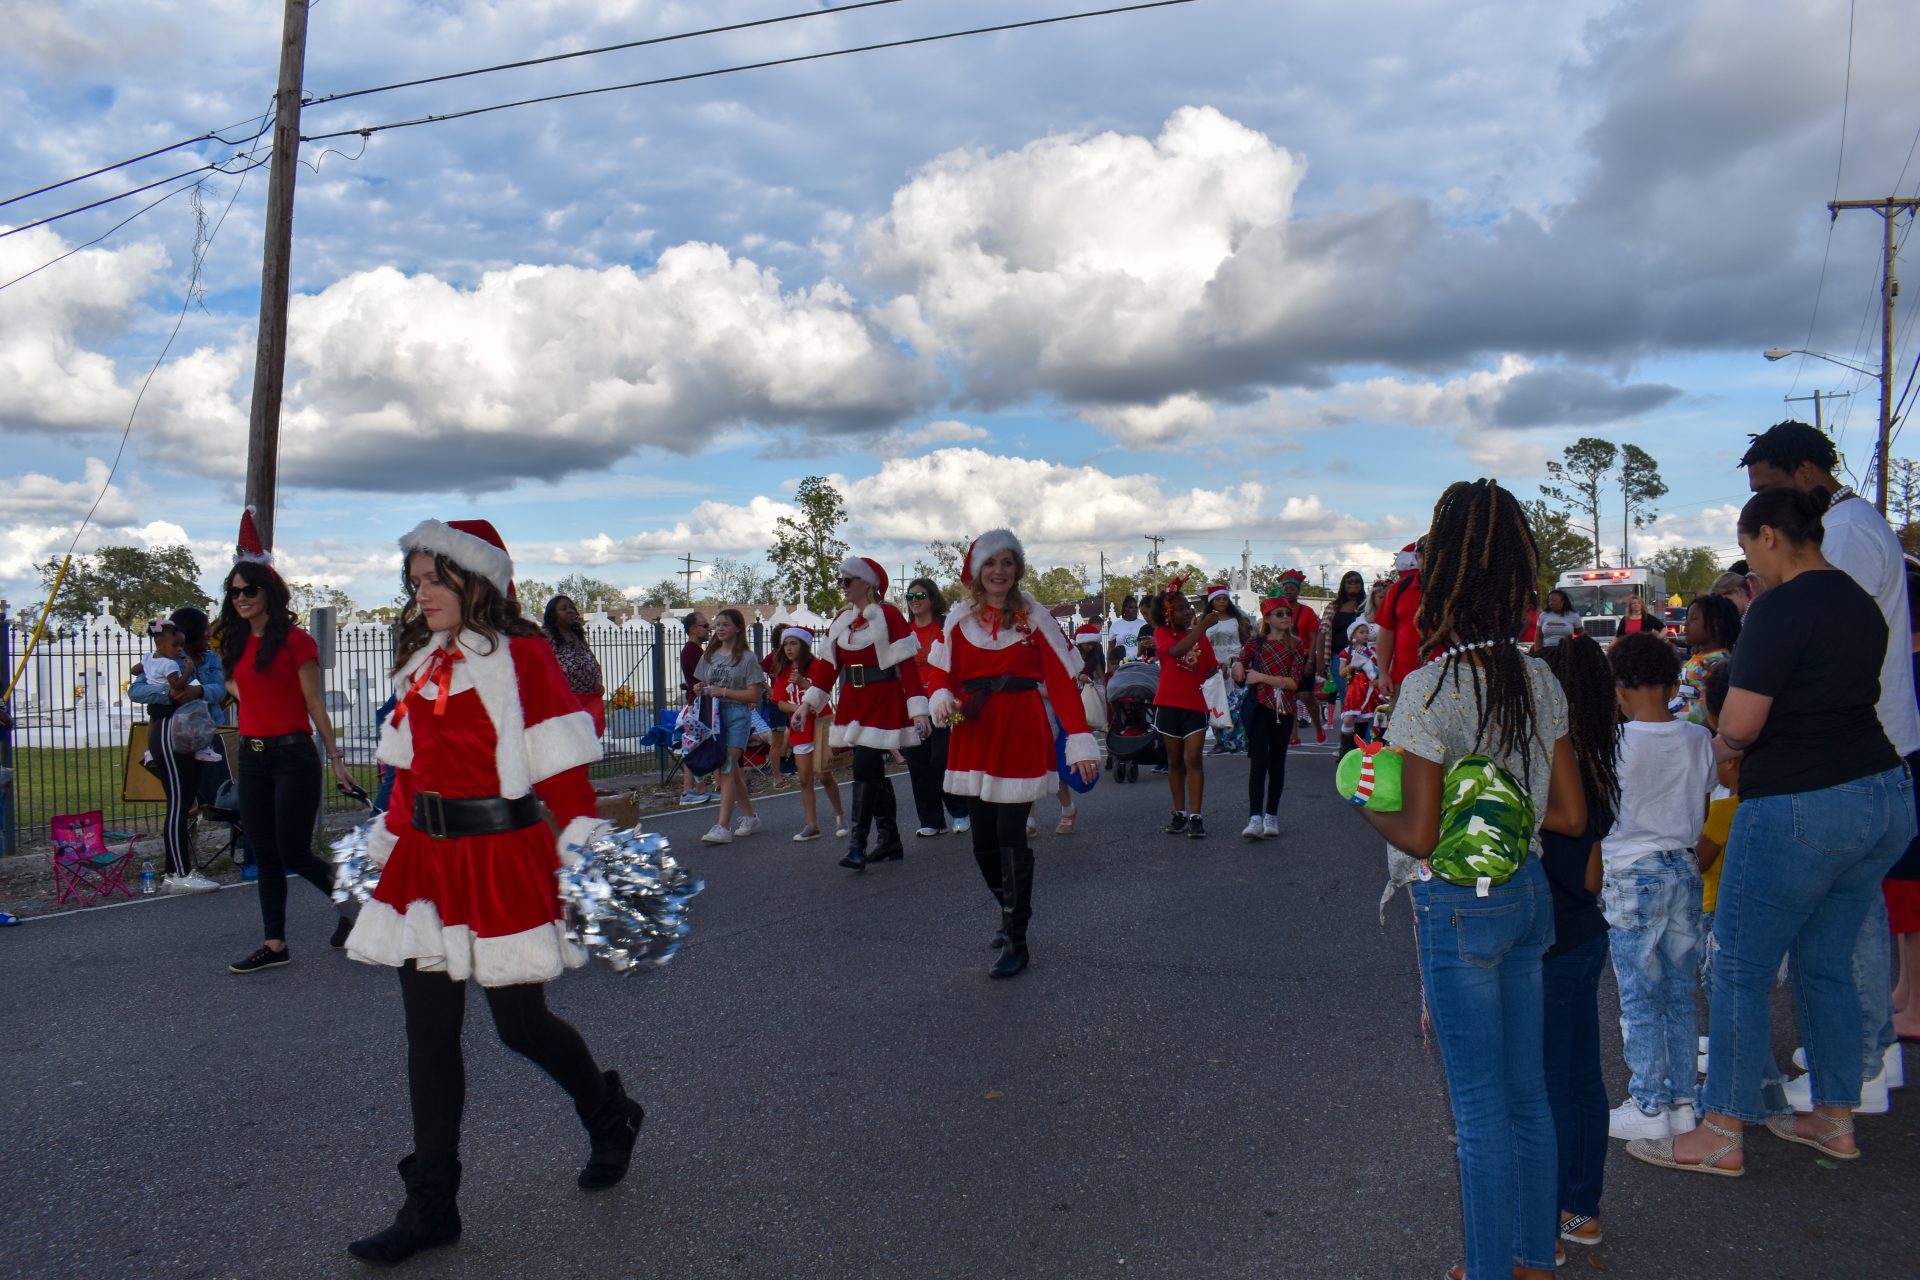 Gallery Thibodaux Christmas Parade The Times of Houma/Thibodaux